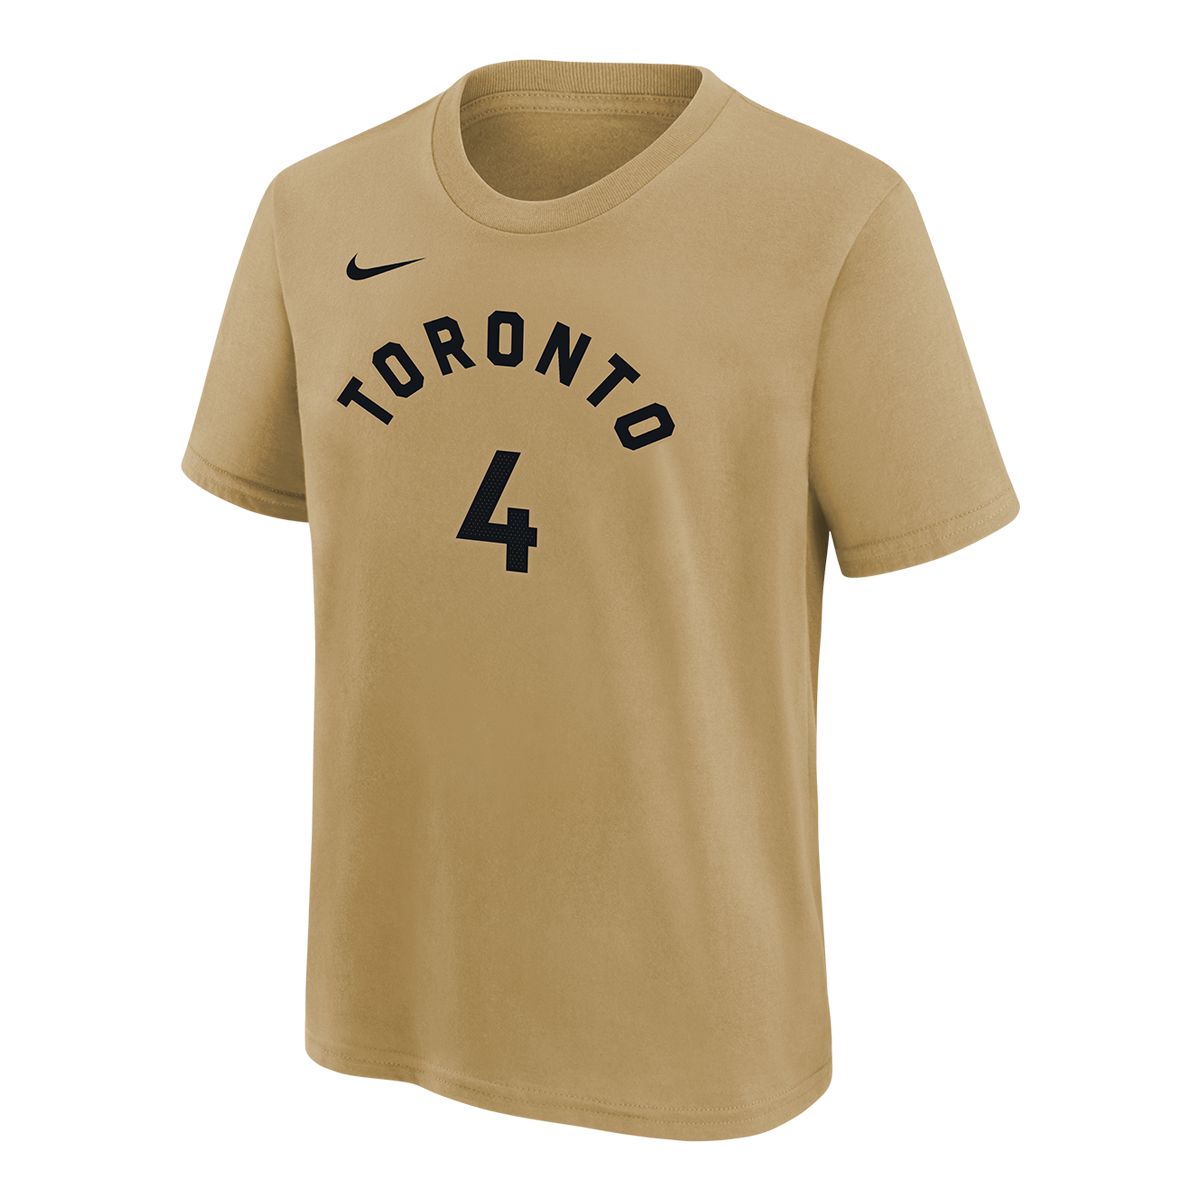 Toronto Raptors 47 Brand Women's Glimmer On T Shirt